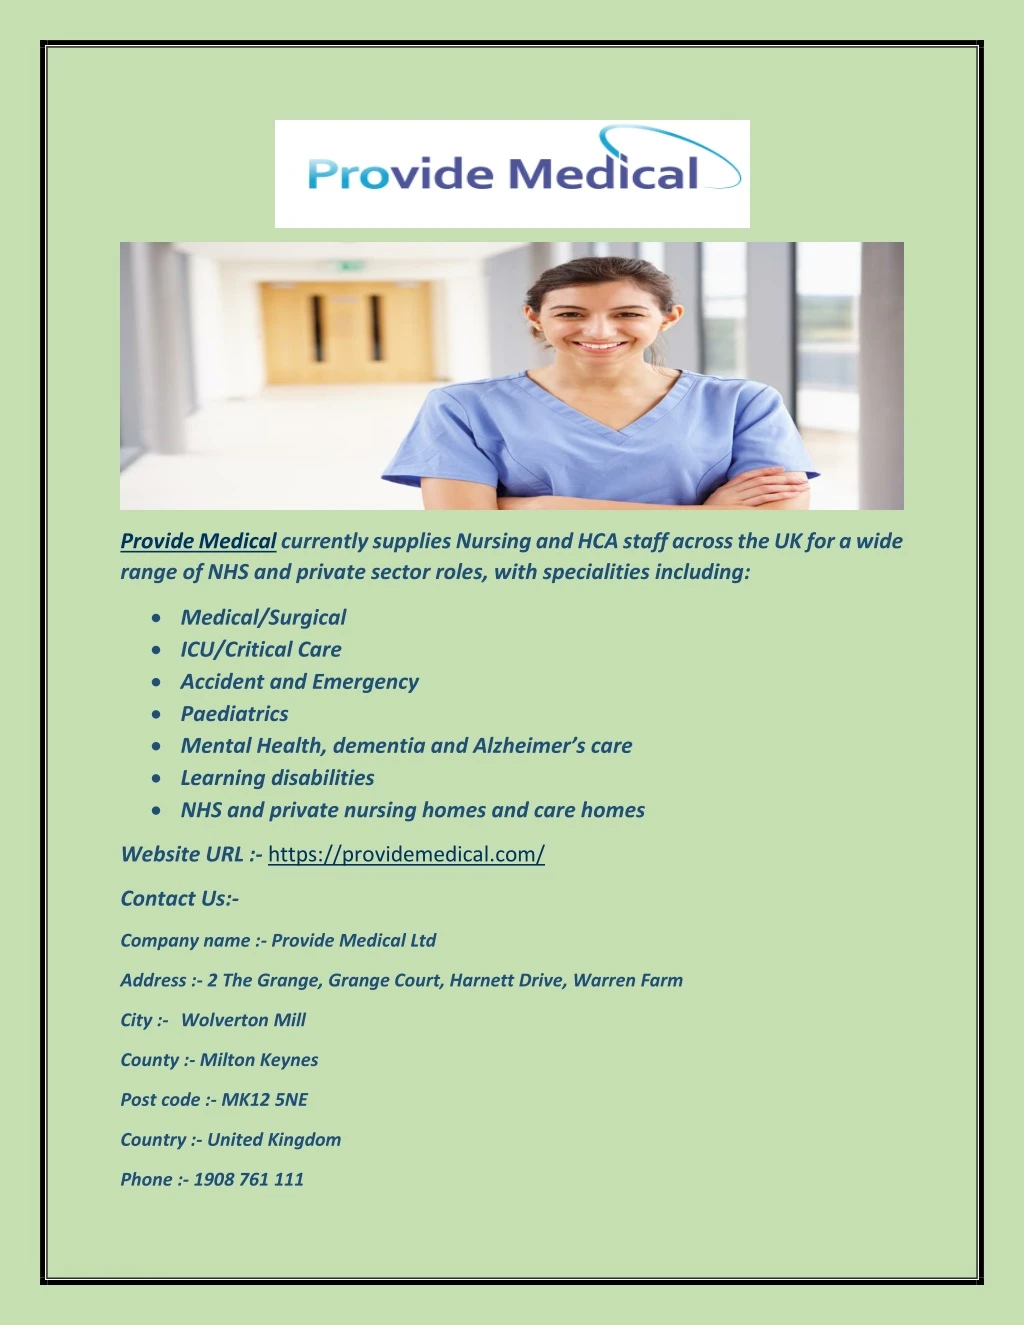 provide medical currently supplies nursing